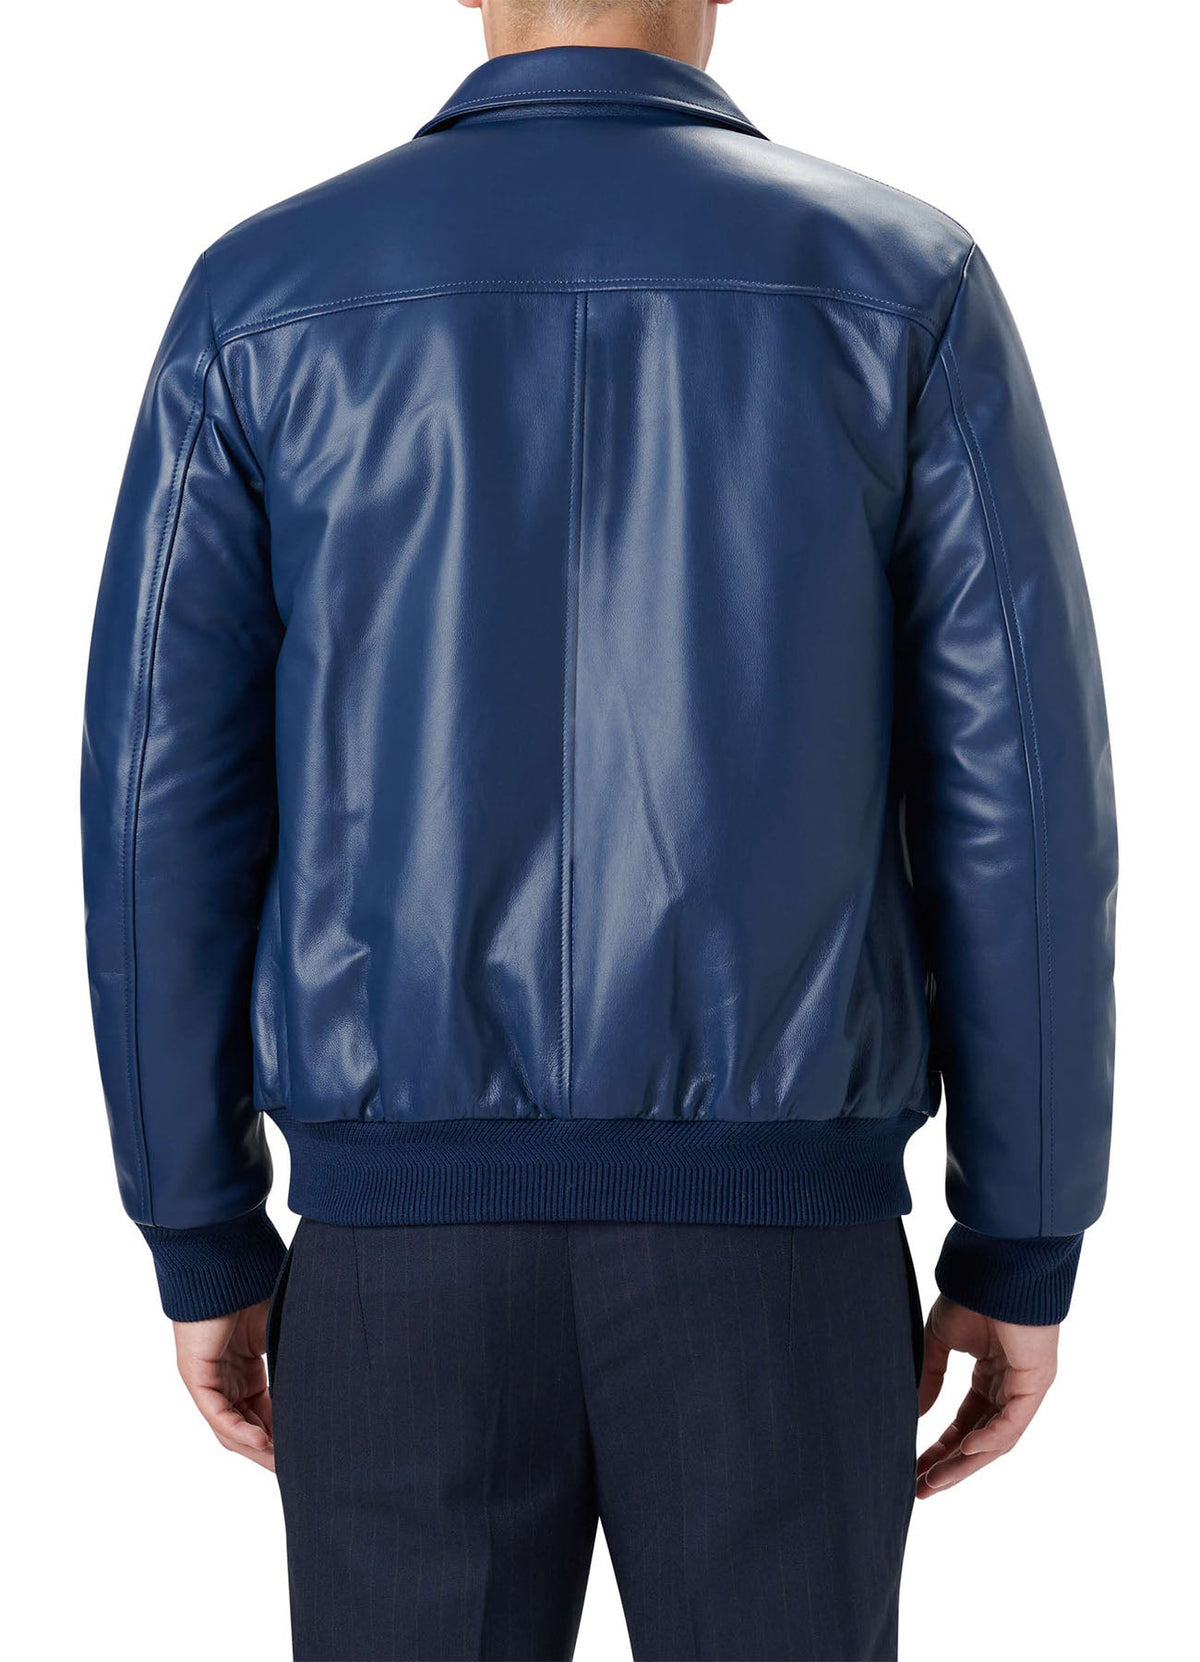 Mens Soft Blue Bomber Leather Jacket